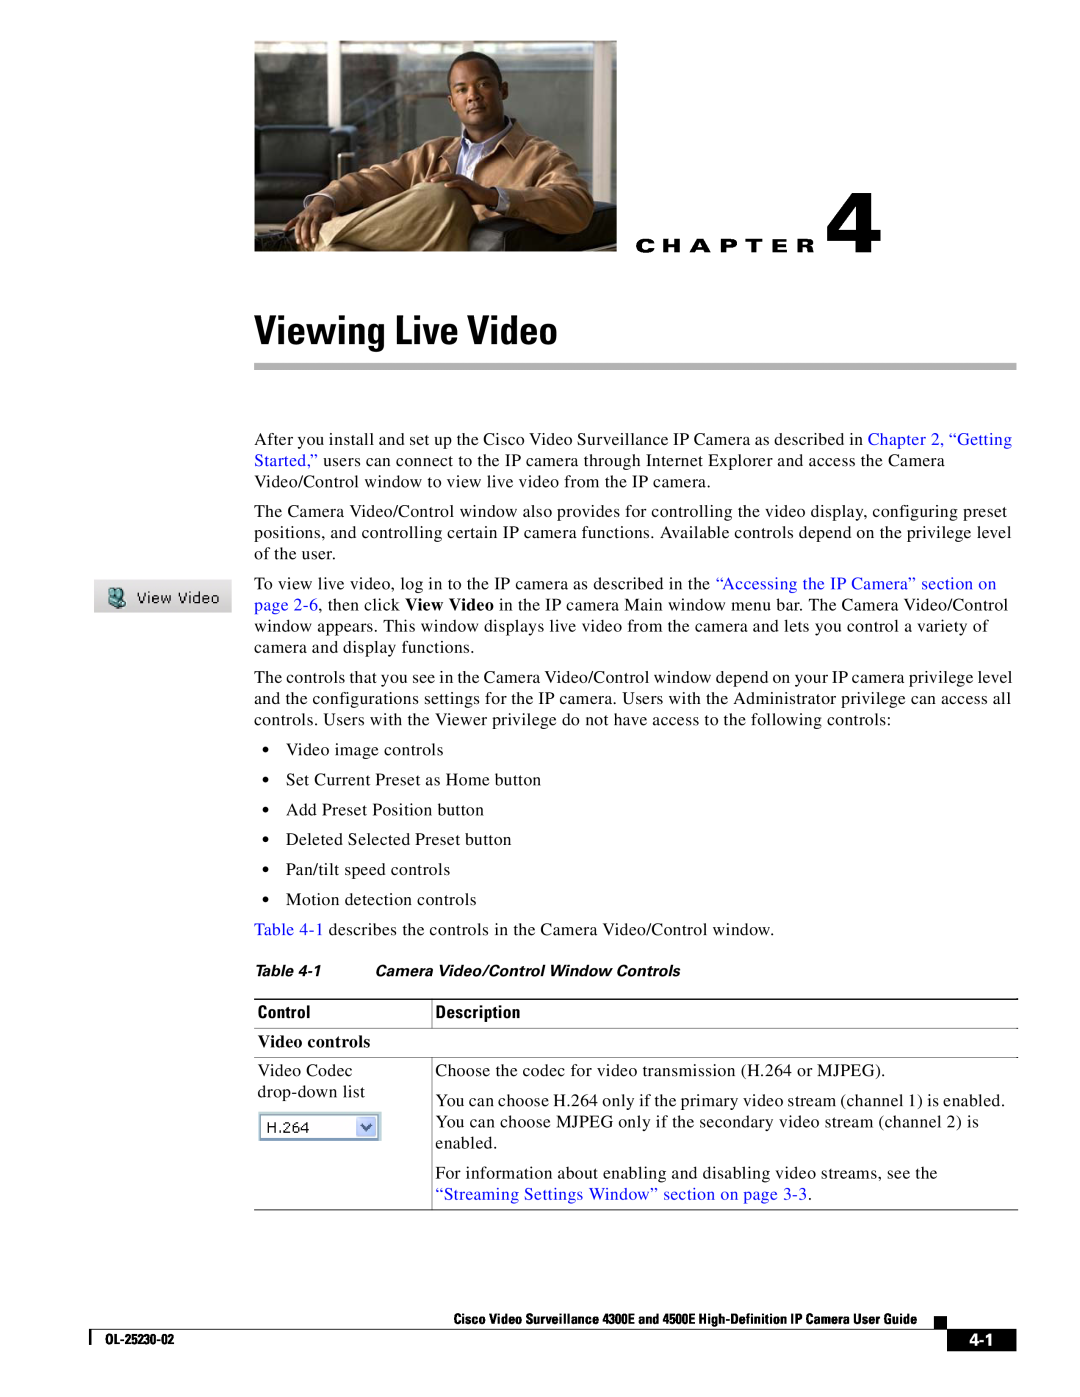 Cisco Systems 4300E manual Viewing Live Video, C H A P T E R, Control, Description, Video controls 